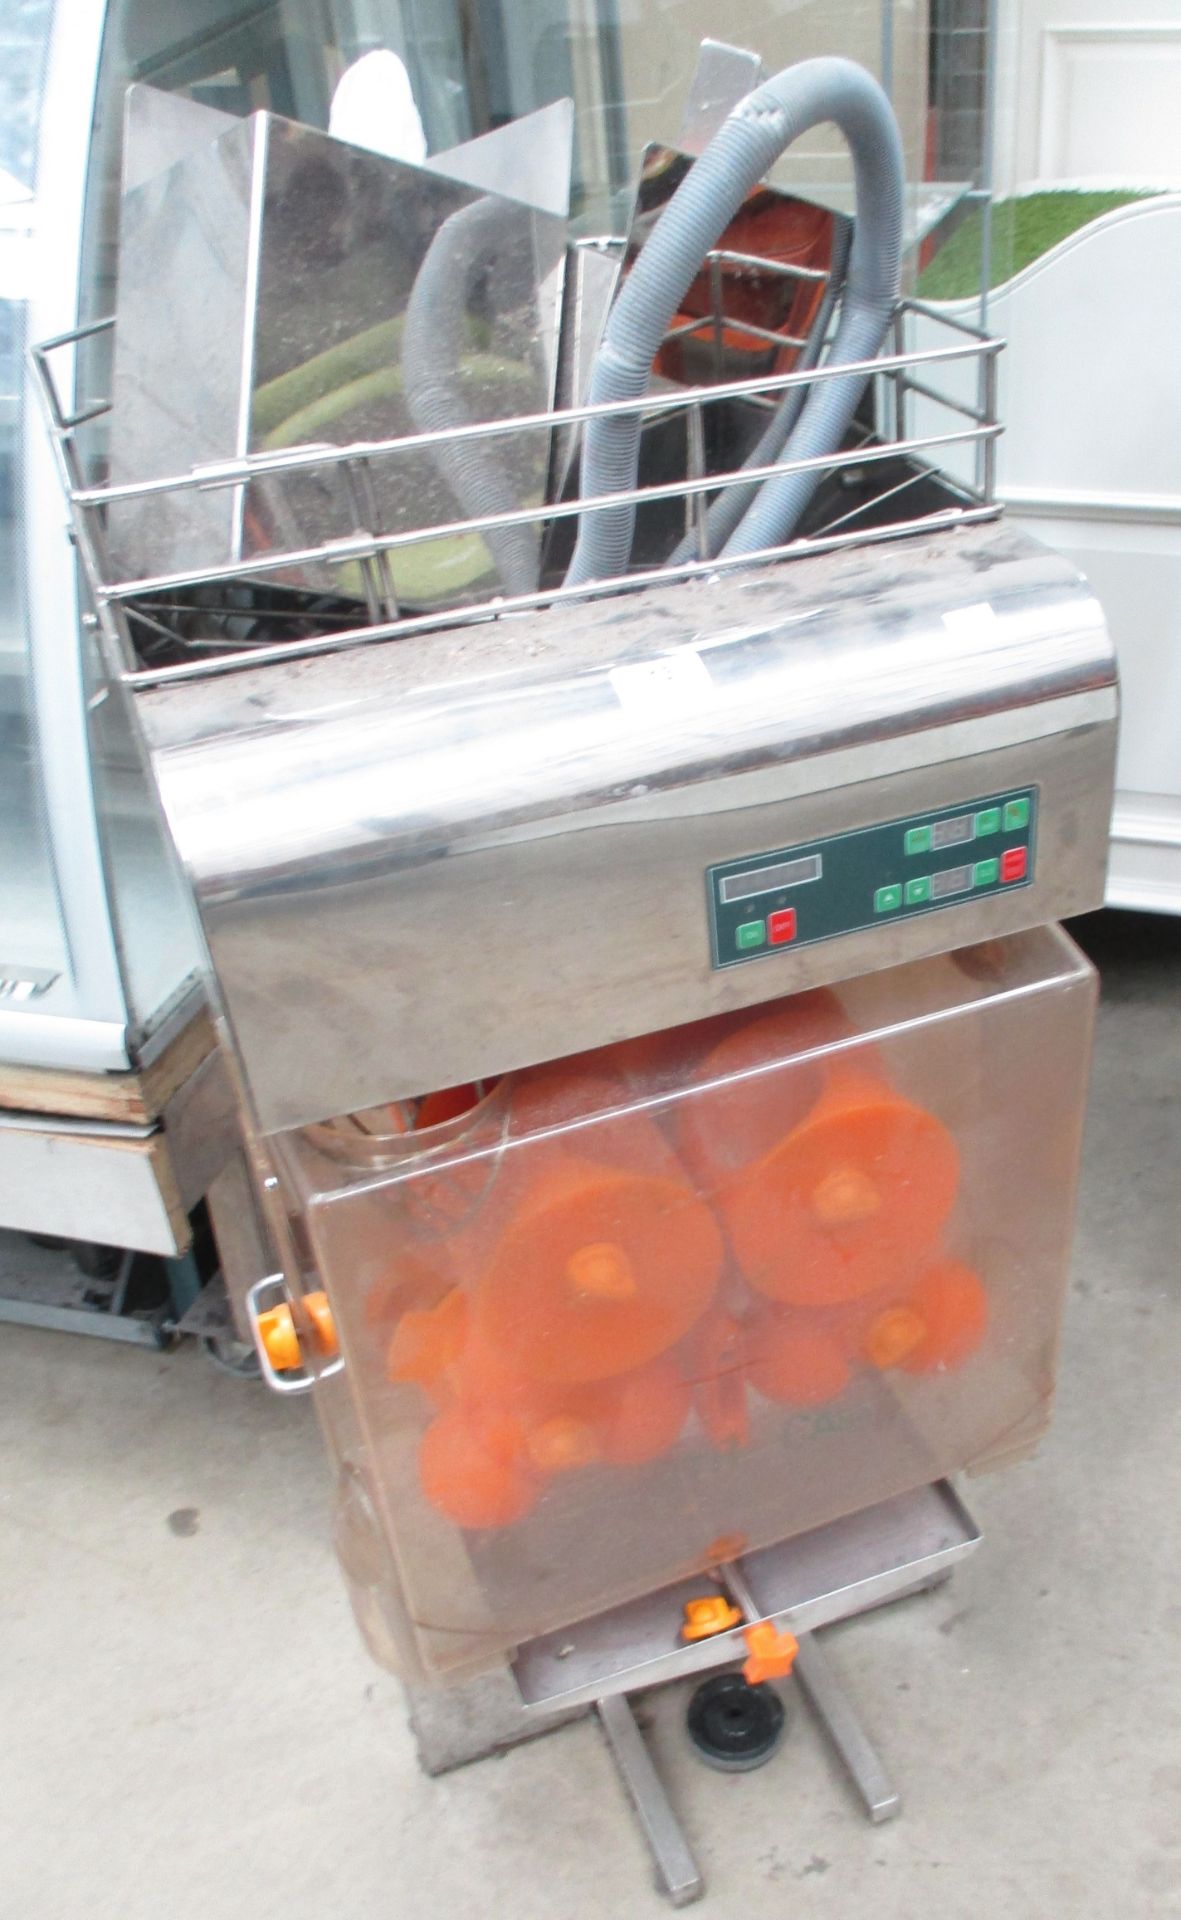 A Citrocasa 700XB stainless steel orange press juice machine - 240v - not working